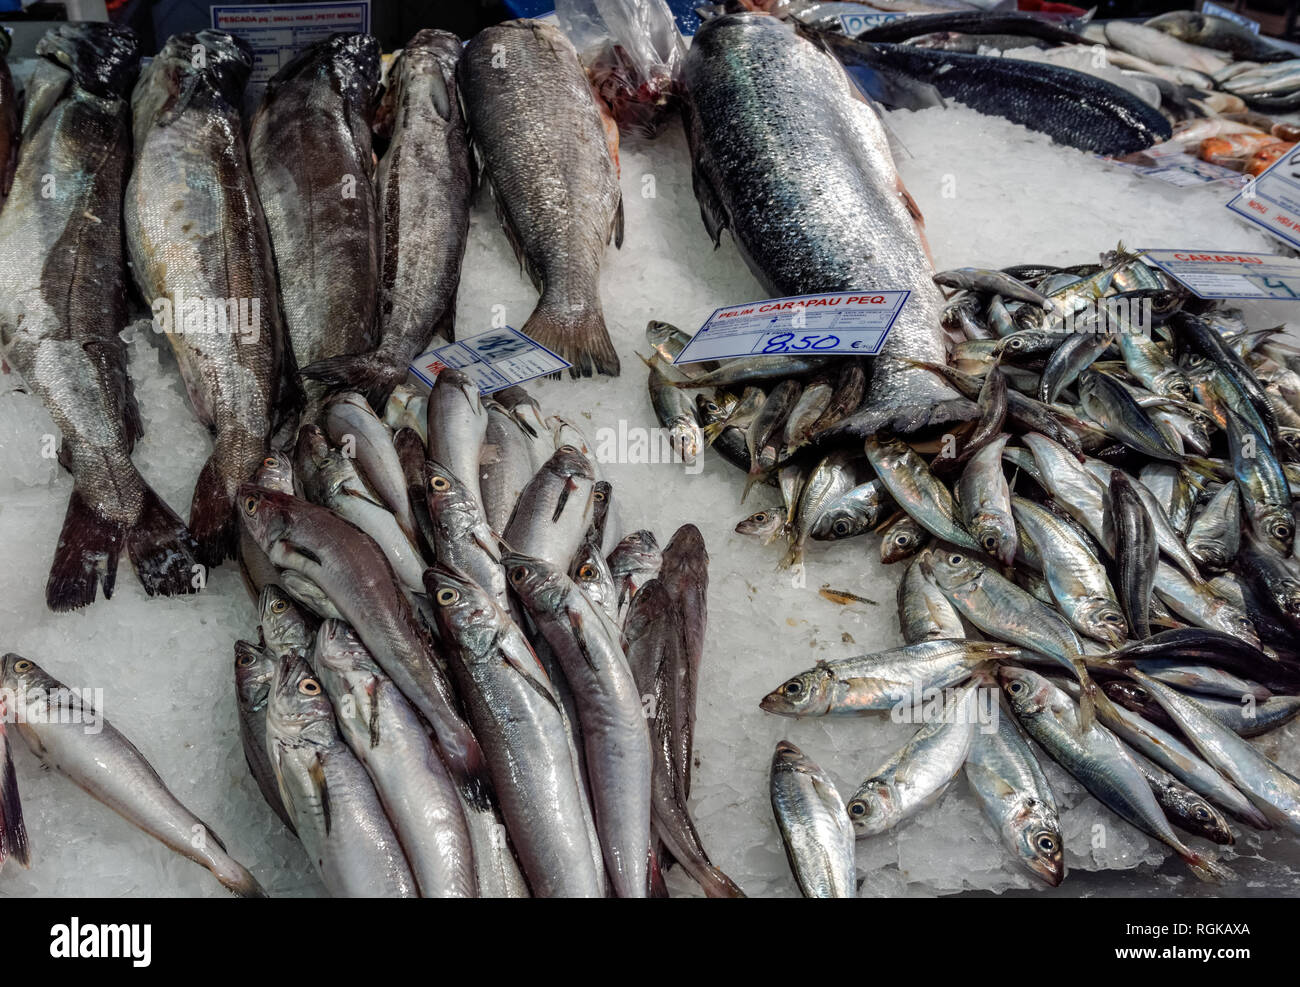 Fishmonger's stall at the Mercado da Ribeira (Ribeira Market) in Lisbon, Portugal Stock Photo